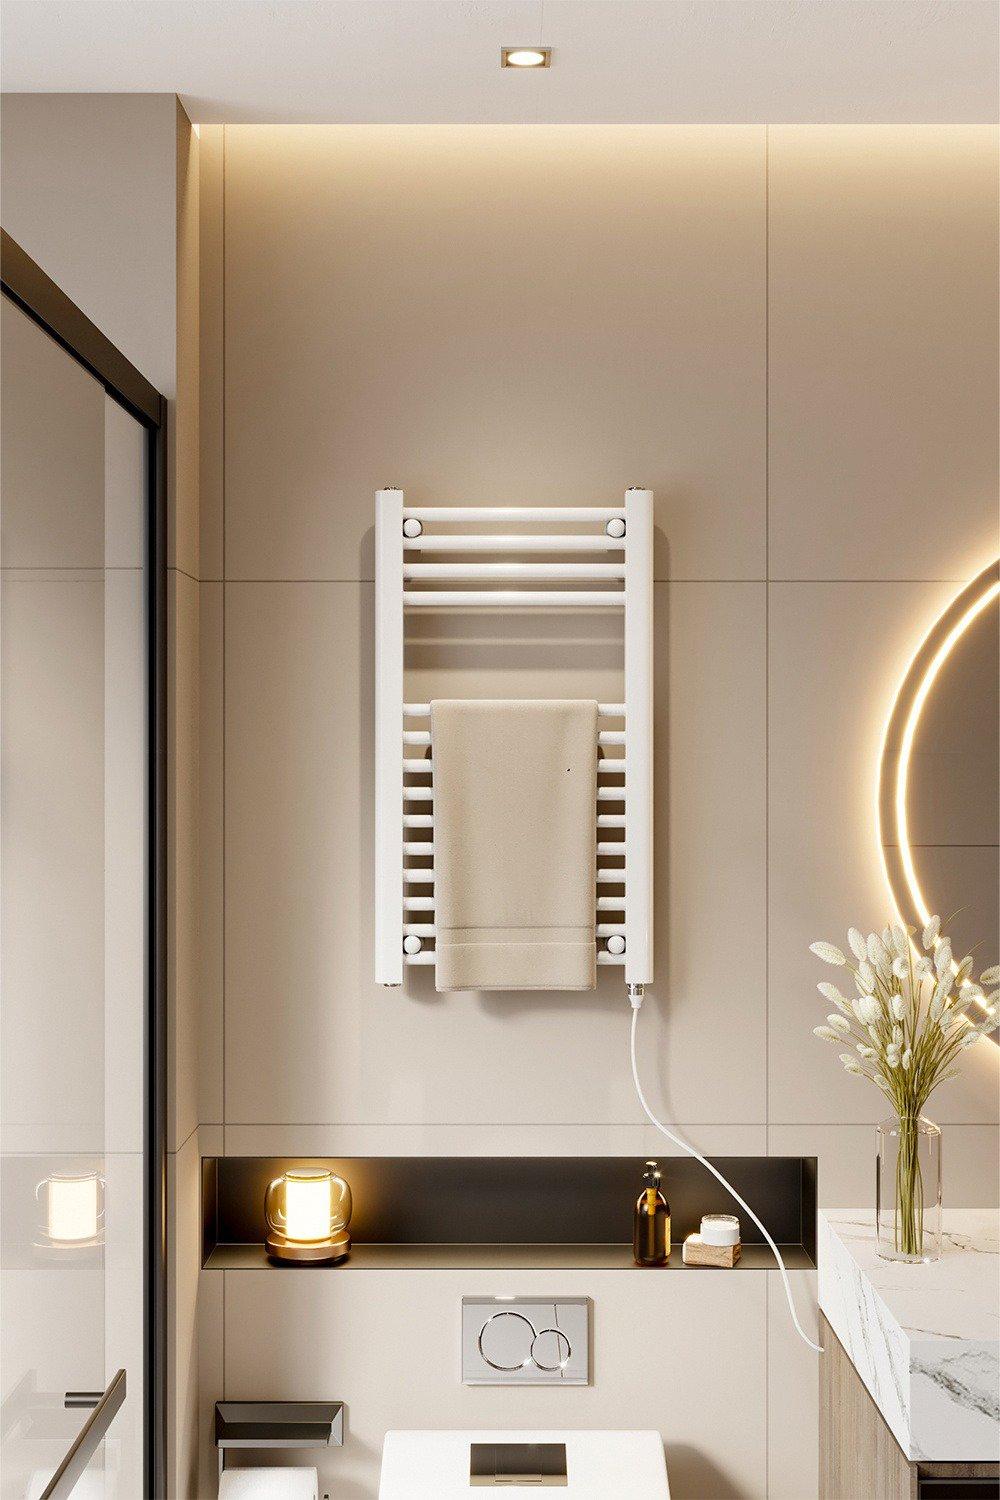 Electric Heated Towel Rail Radiator For Bathroom